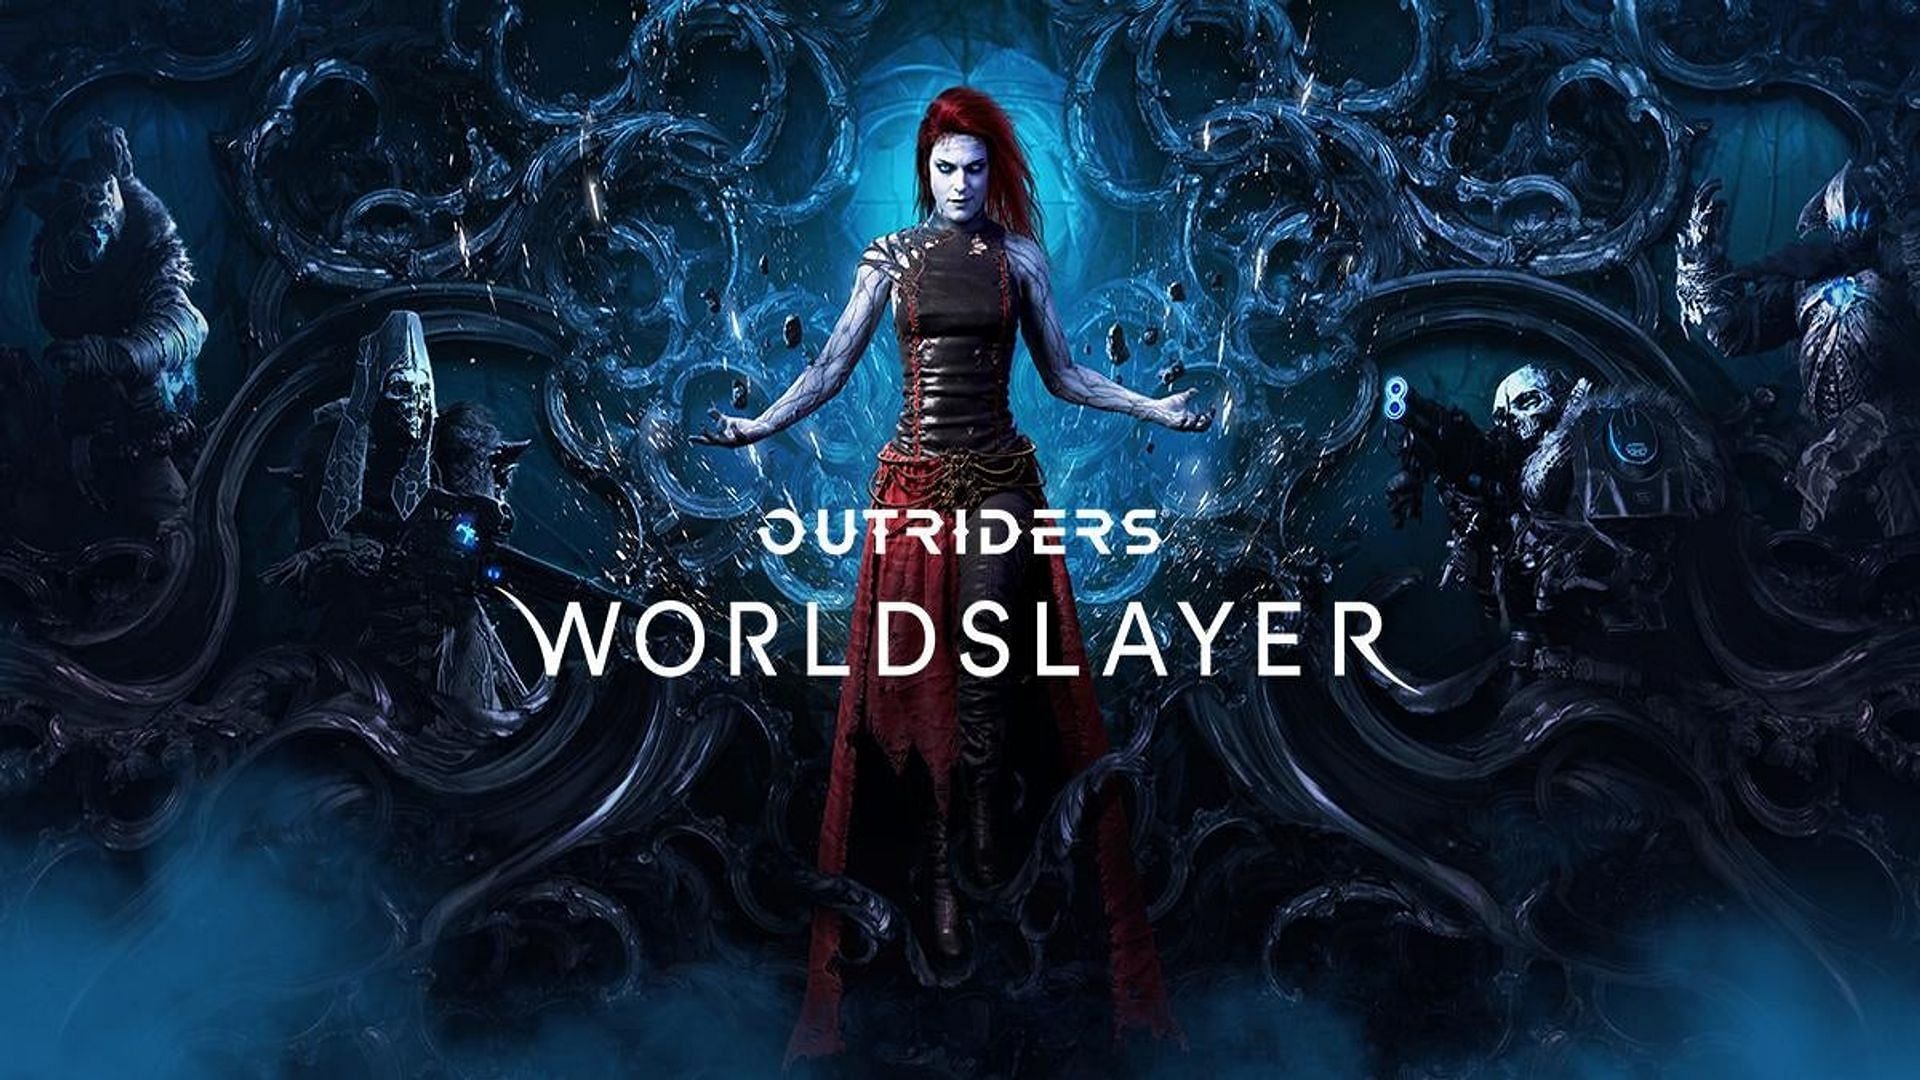 Official artwork for Outrider Worldslayer (Image via Square Enix)